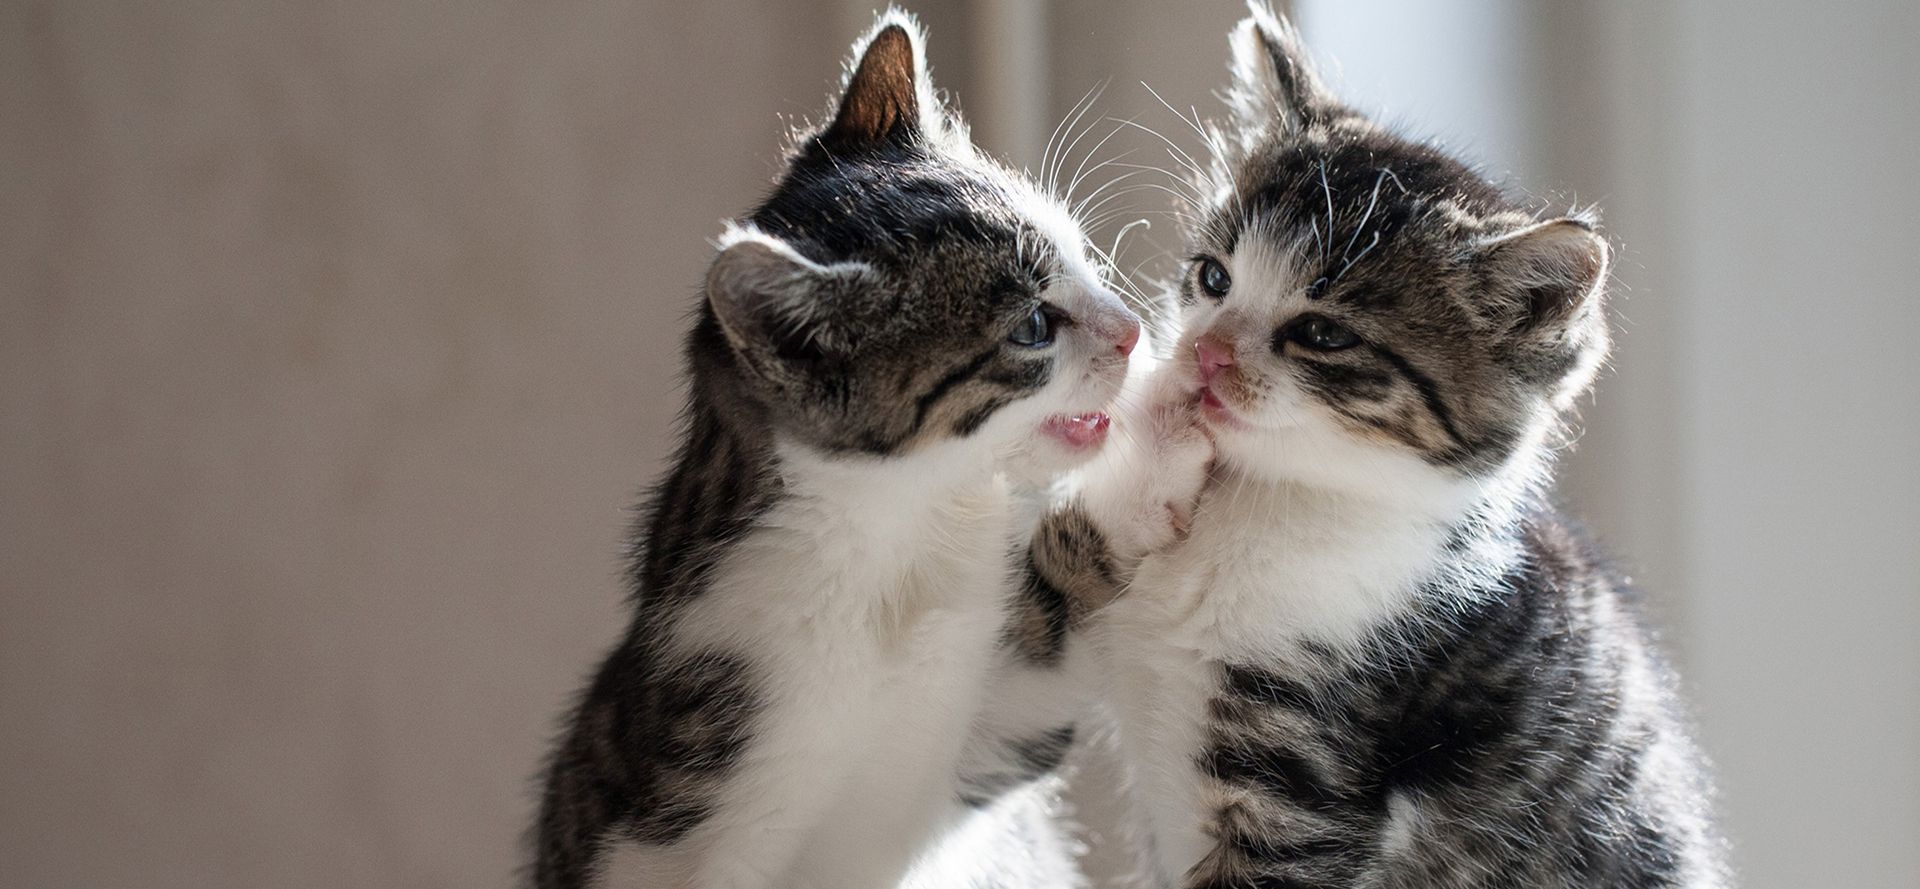 A kitten is jealous of another kitten.